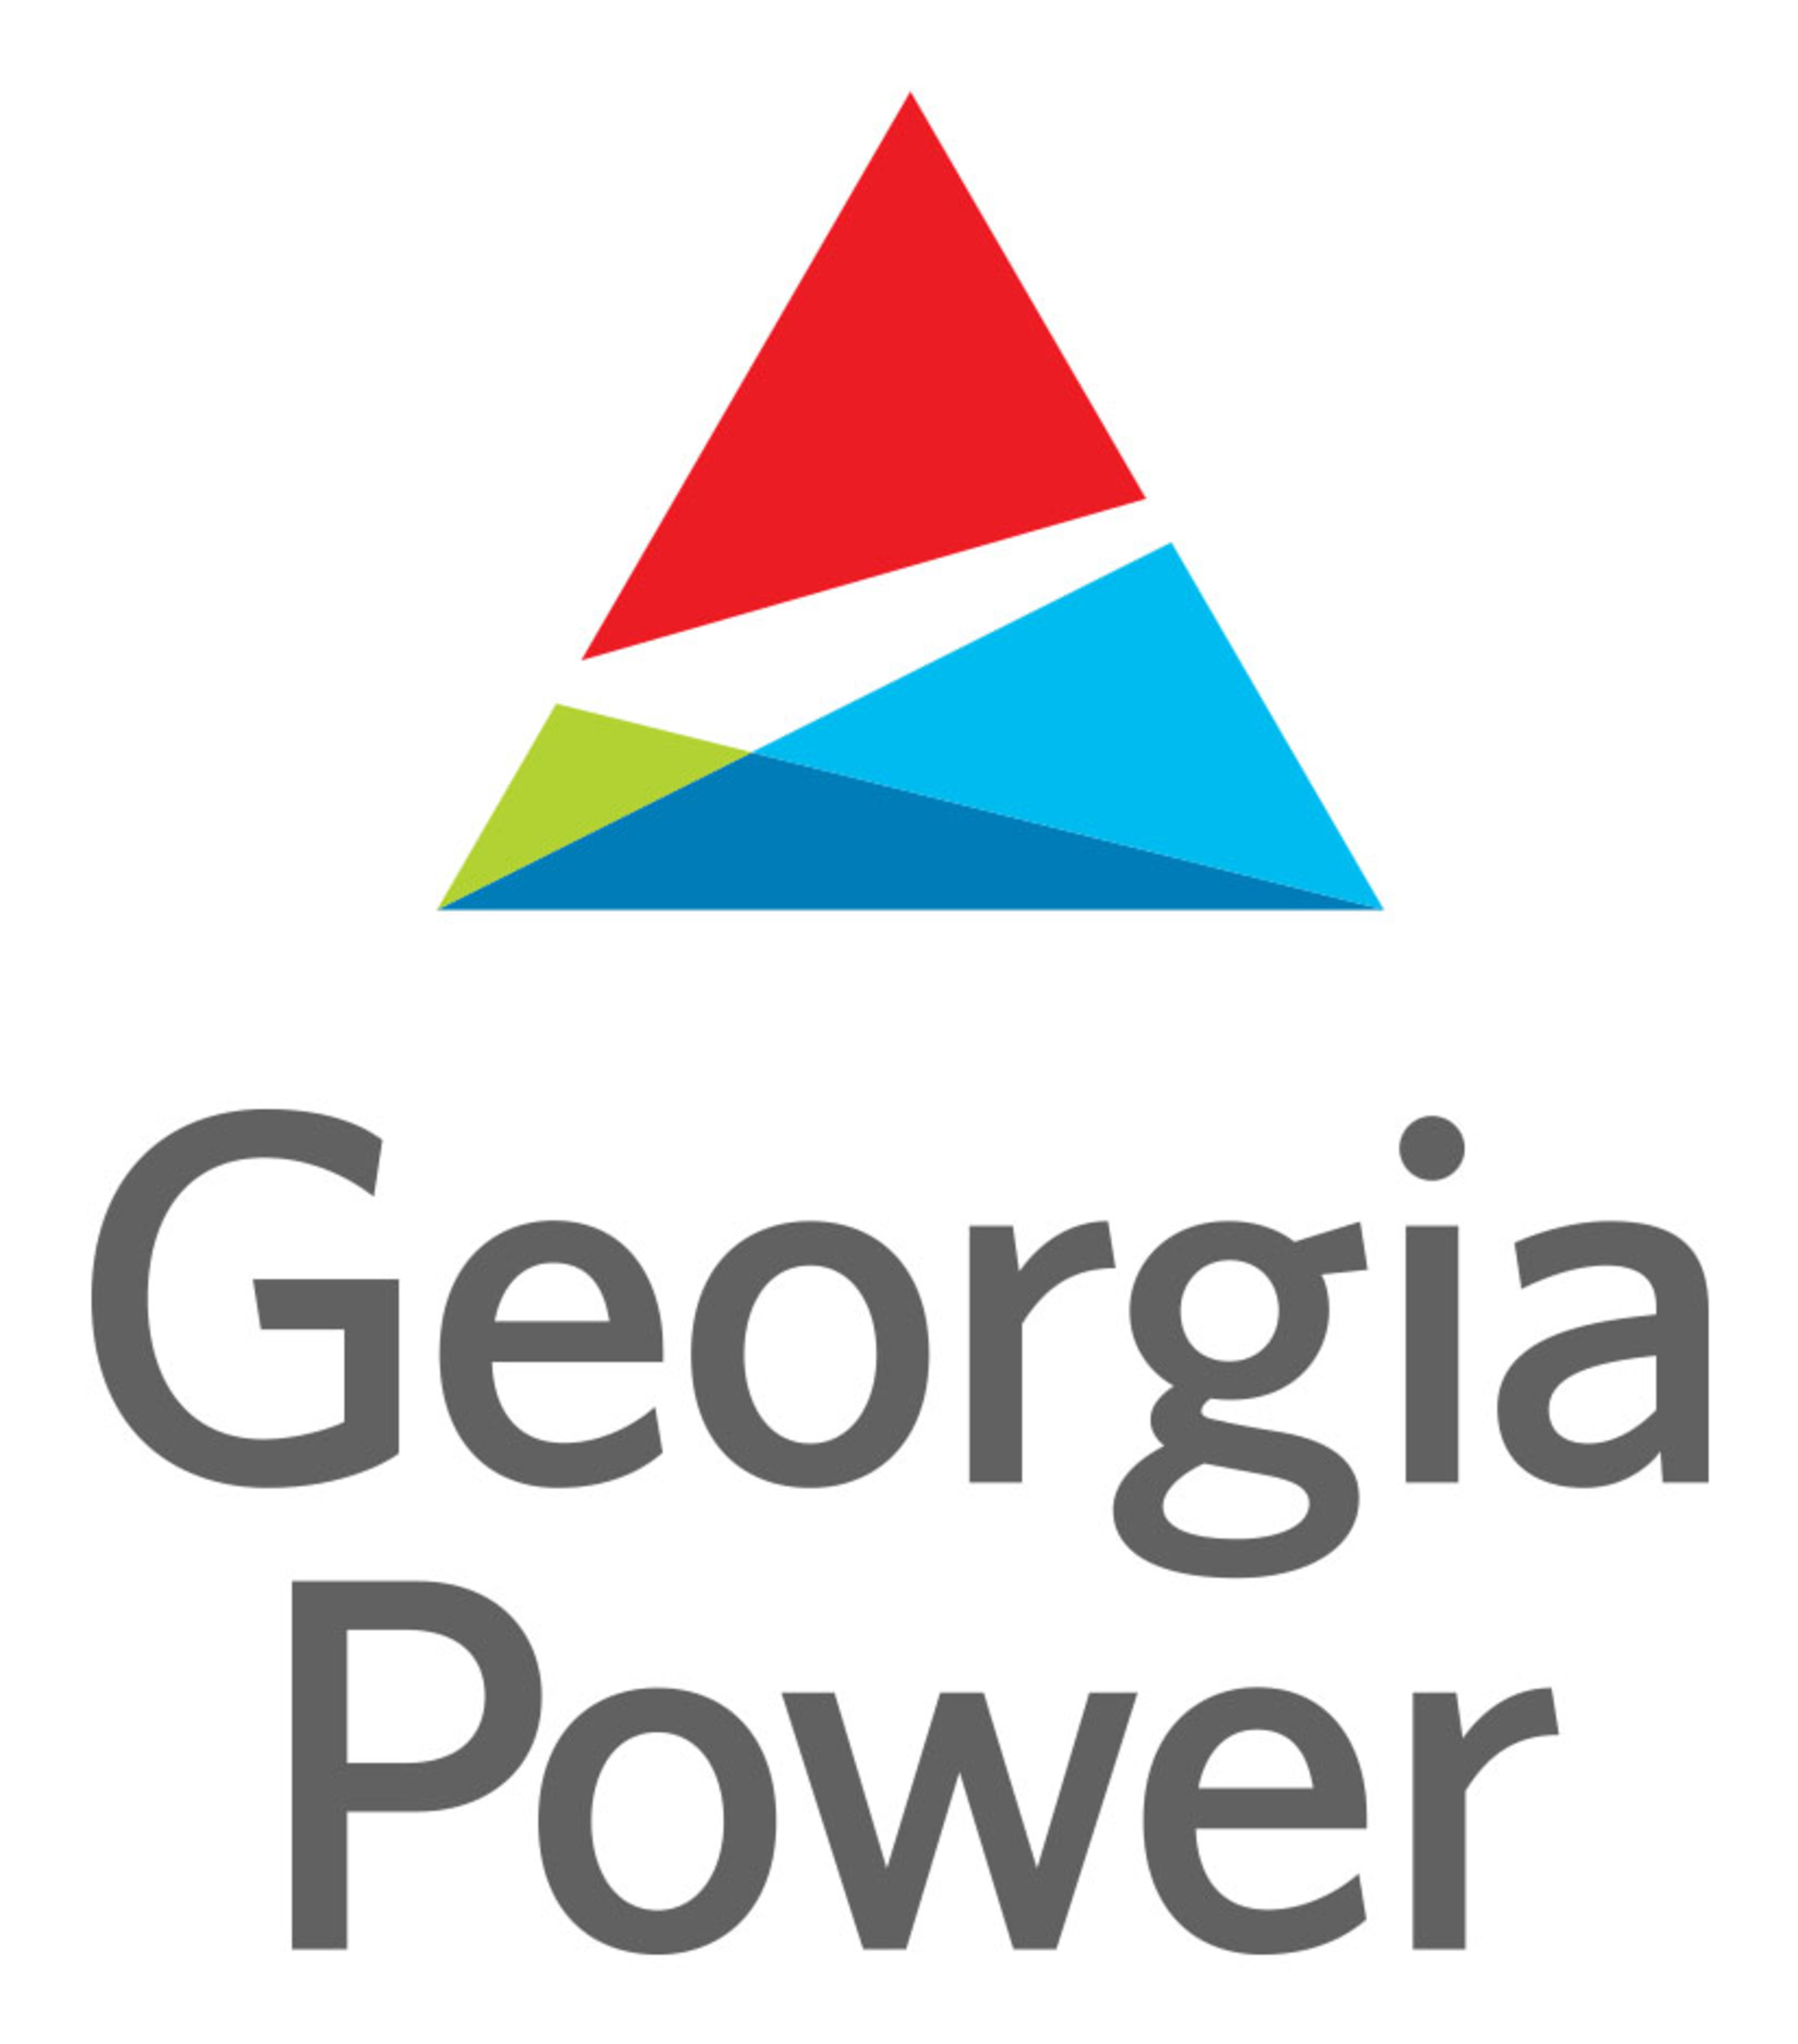 Georgia Power logo.